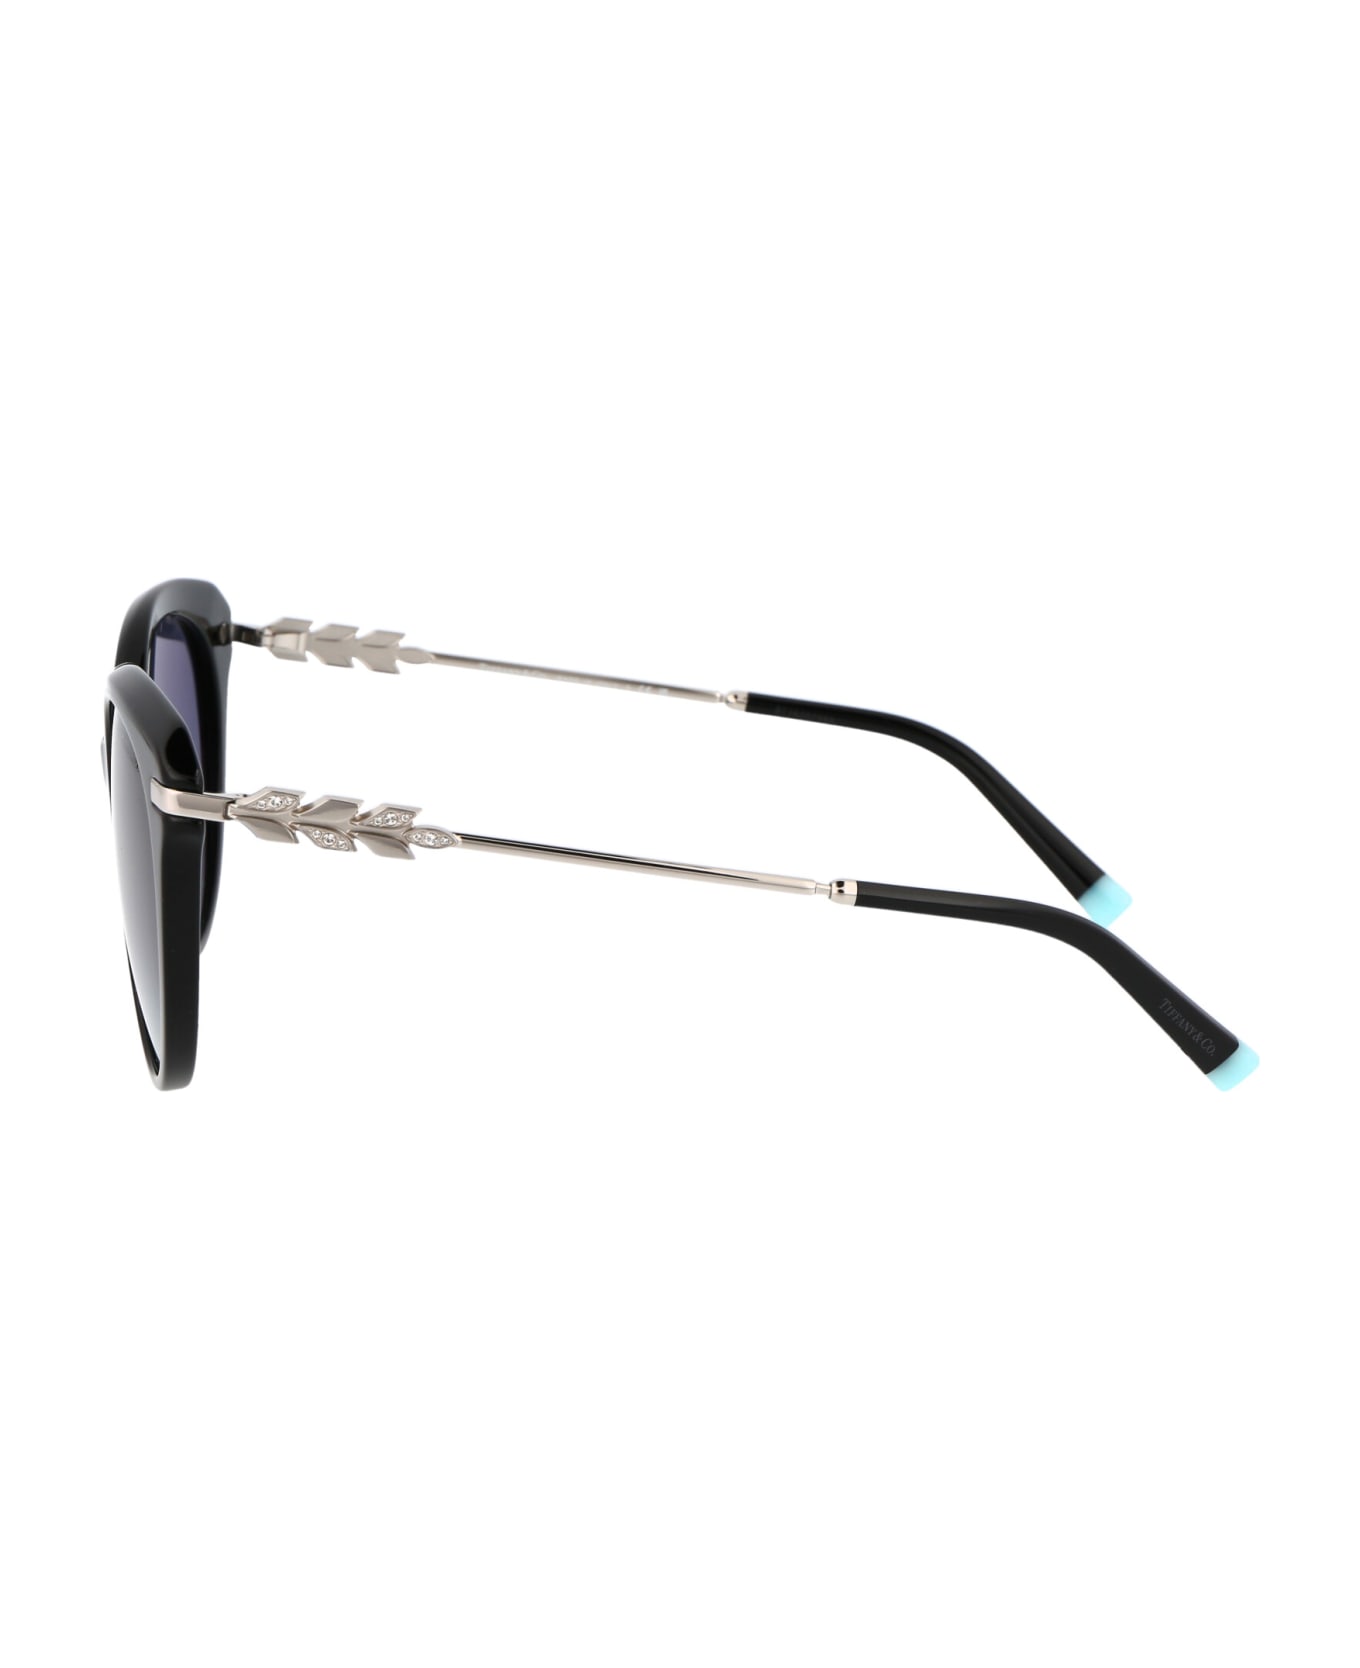 Tiffany & Co. 0tf4189b Sunglasses - 80019S Black サングラス